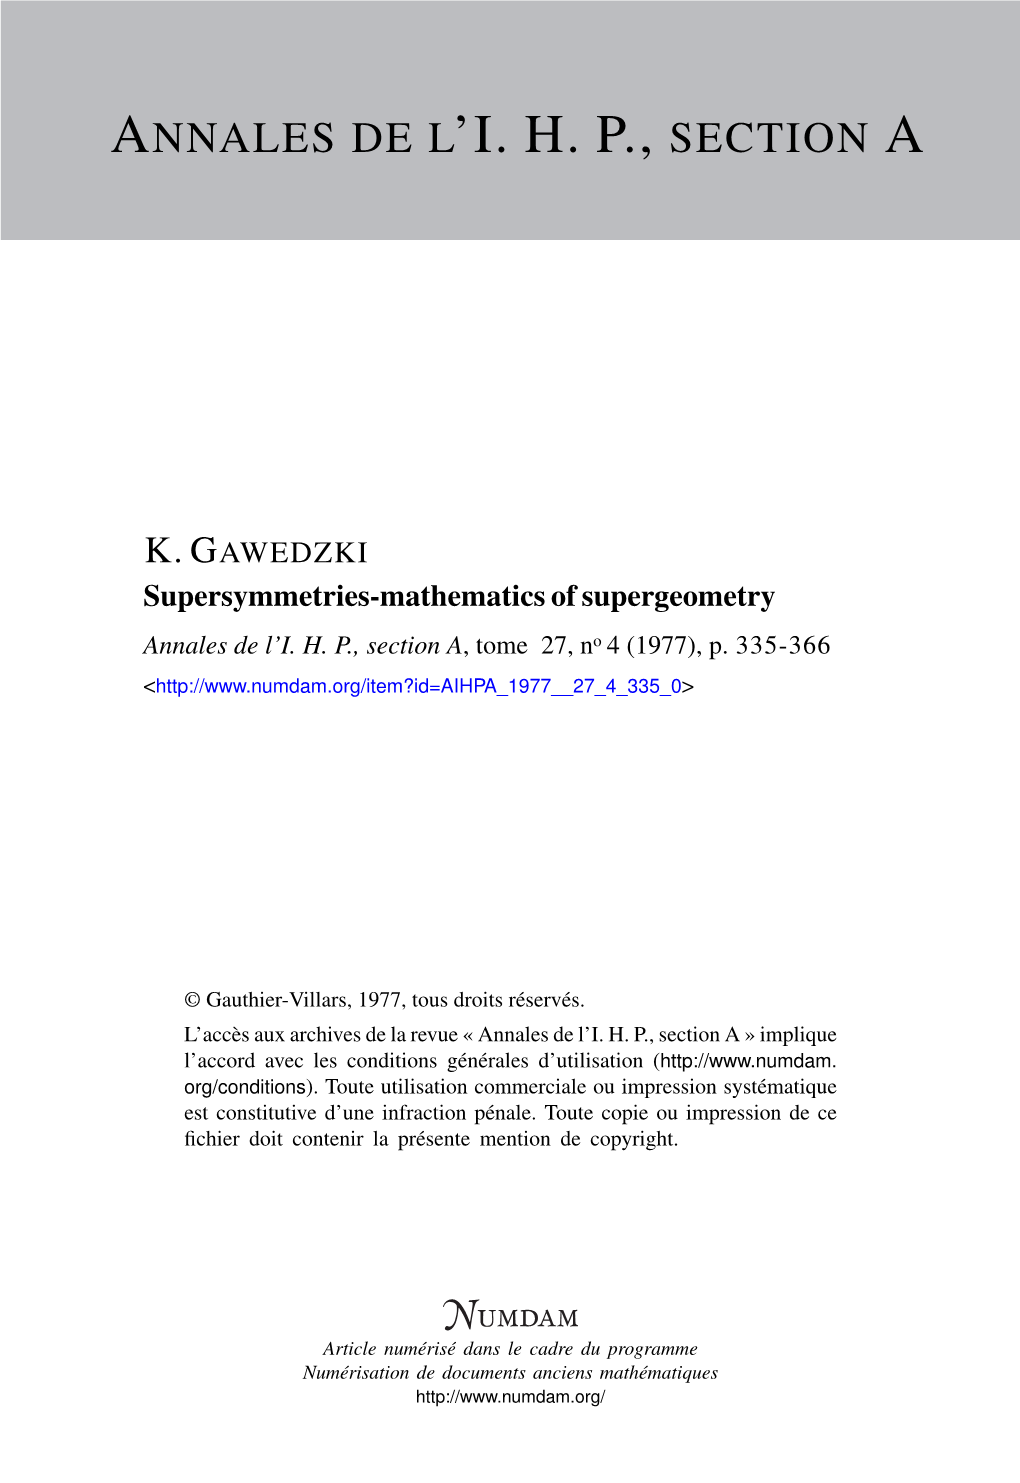 Supersymmetries-Mathematics of Supergeometry Annales De L’I